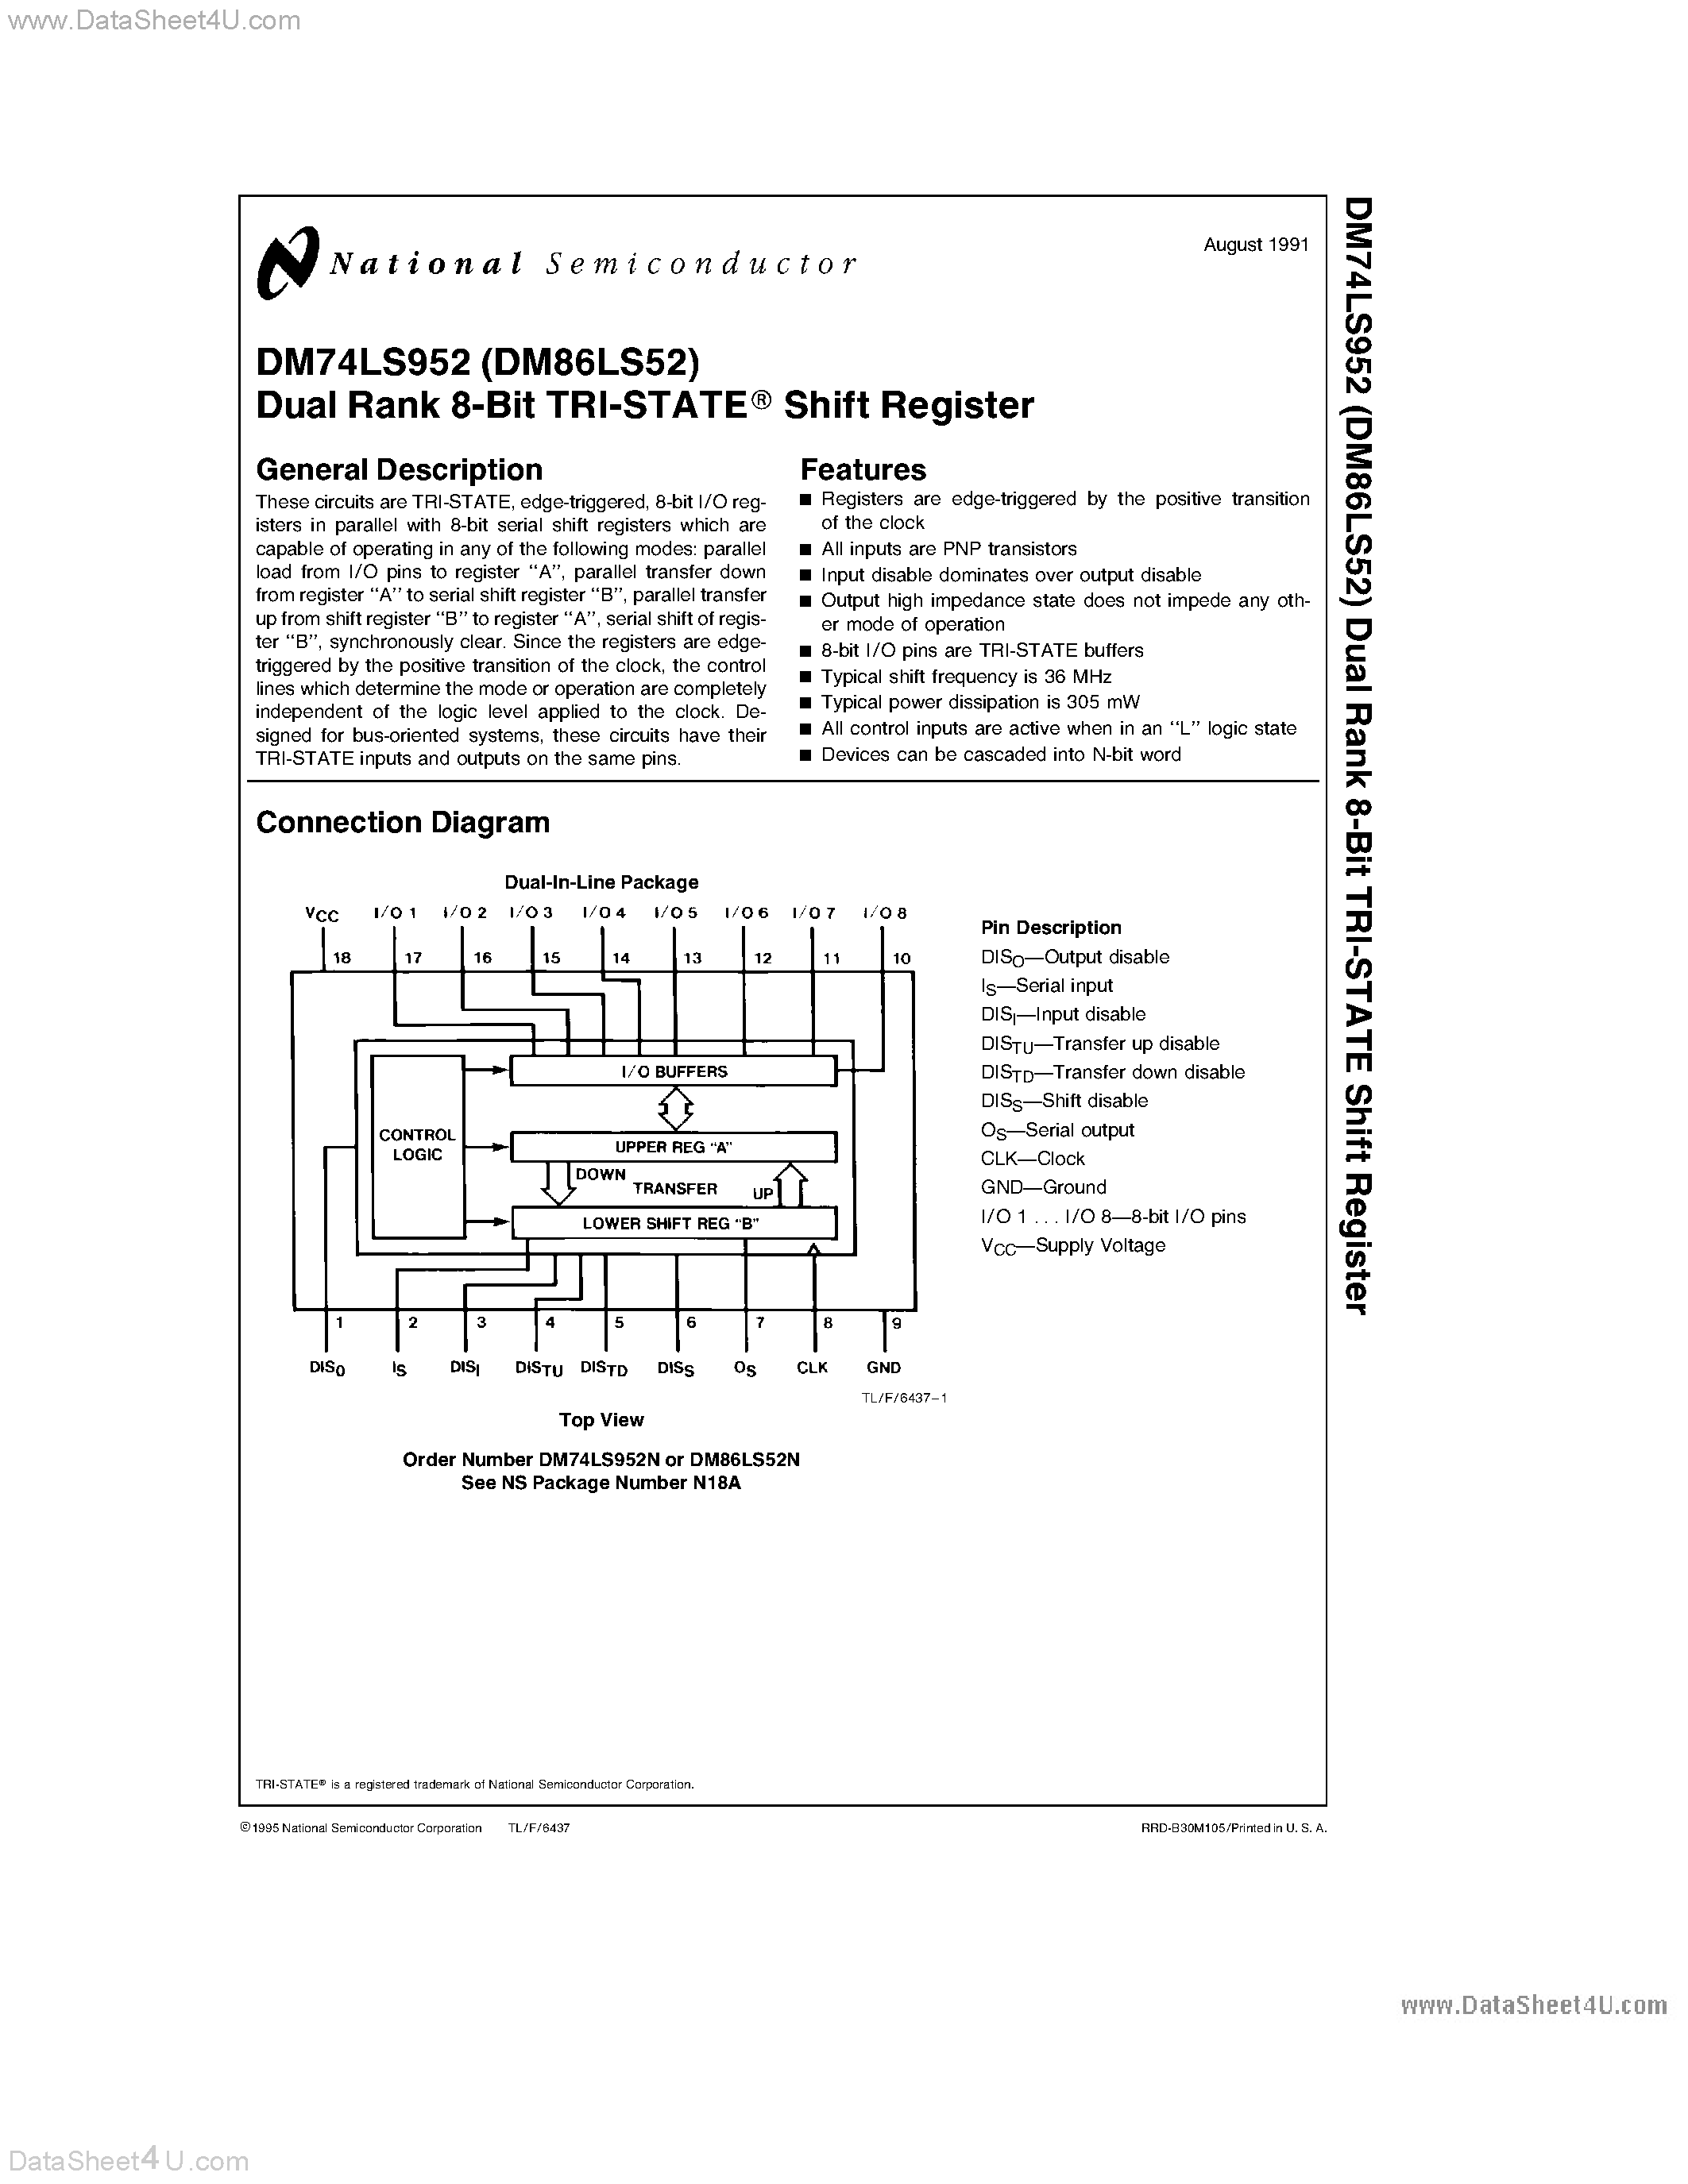 Datasheet DM74LS952 - Dual Rank 8-Bit TRI-STATE?Shift Register page 1